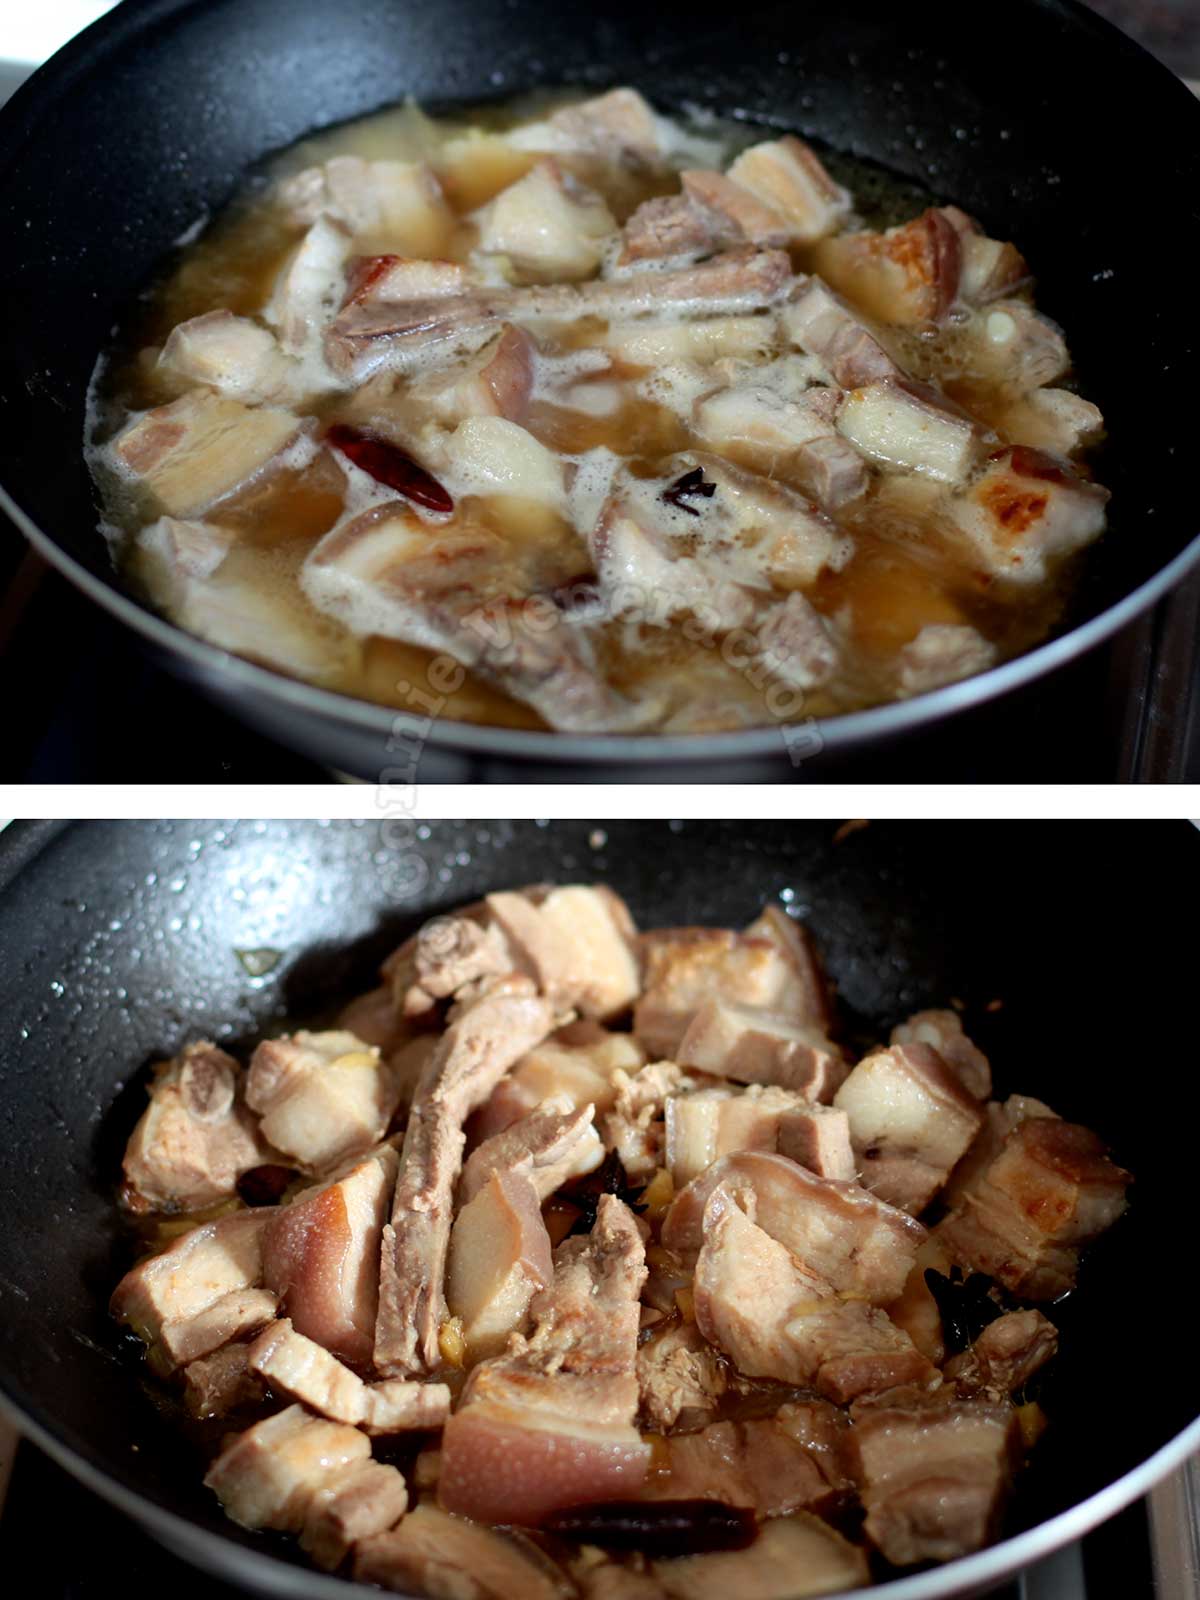 Simmering pork in broth